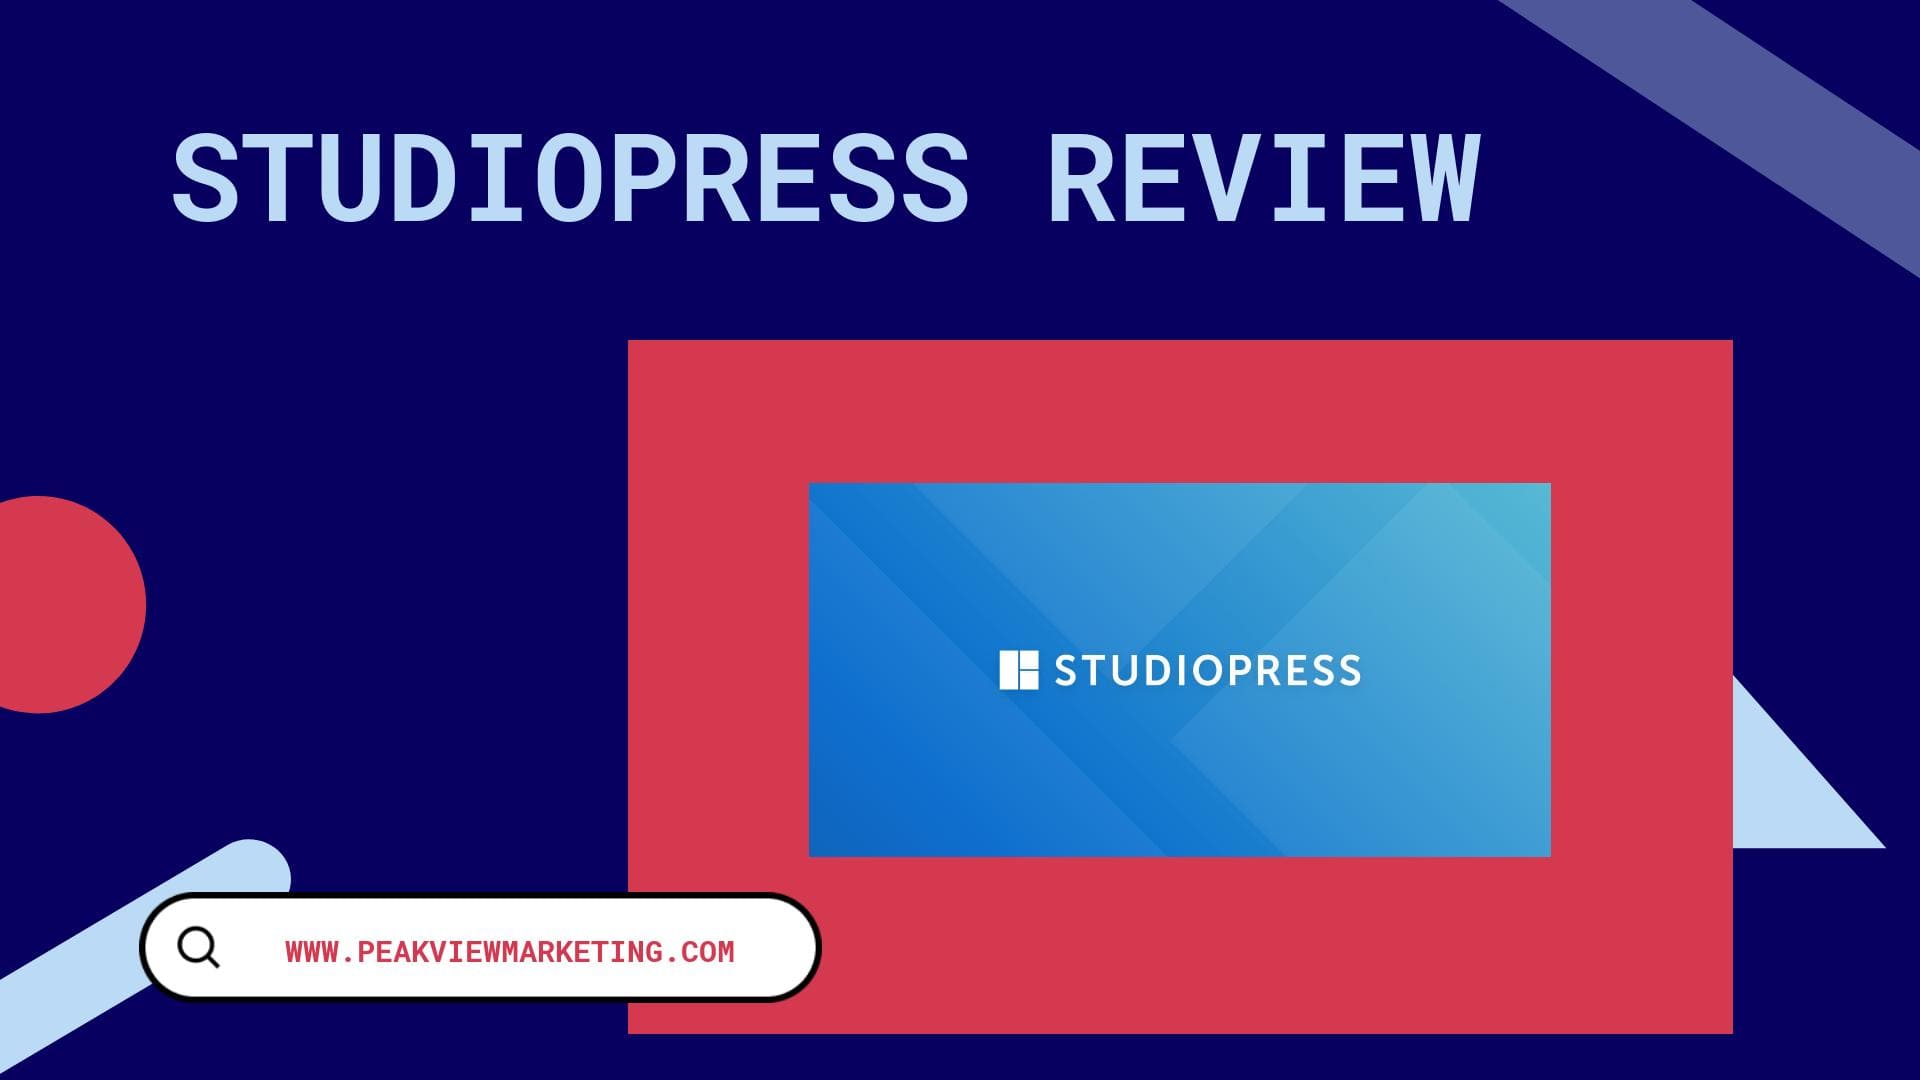 StudioPress Review Image